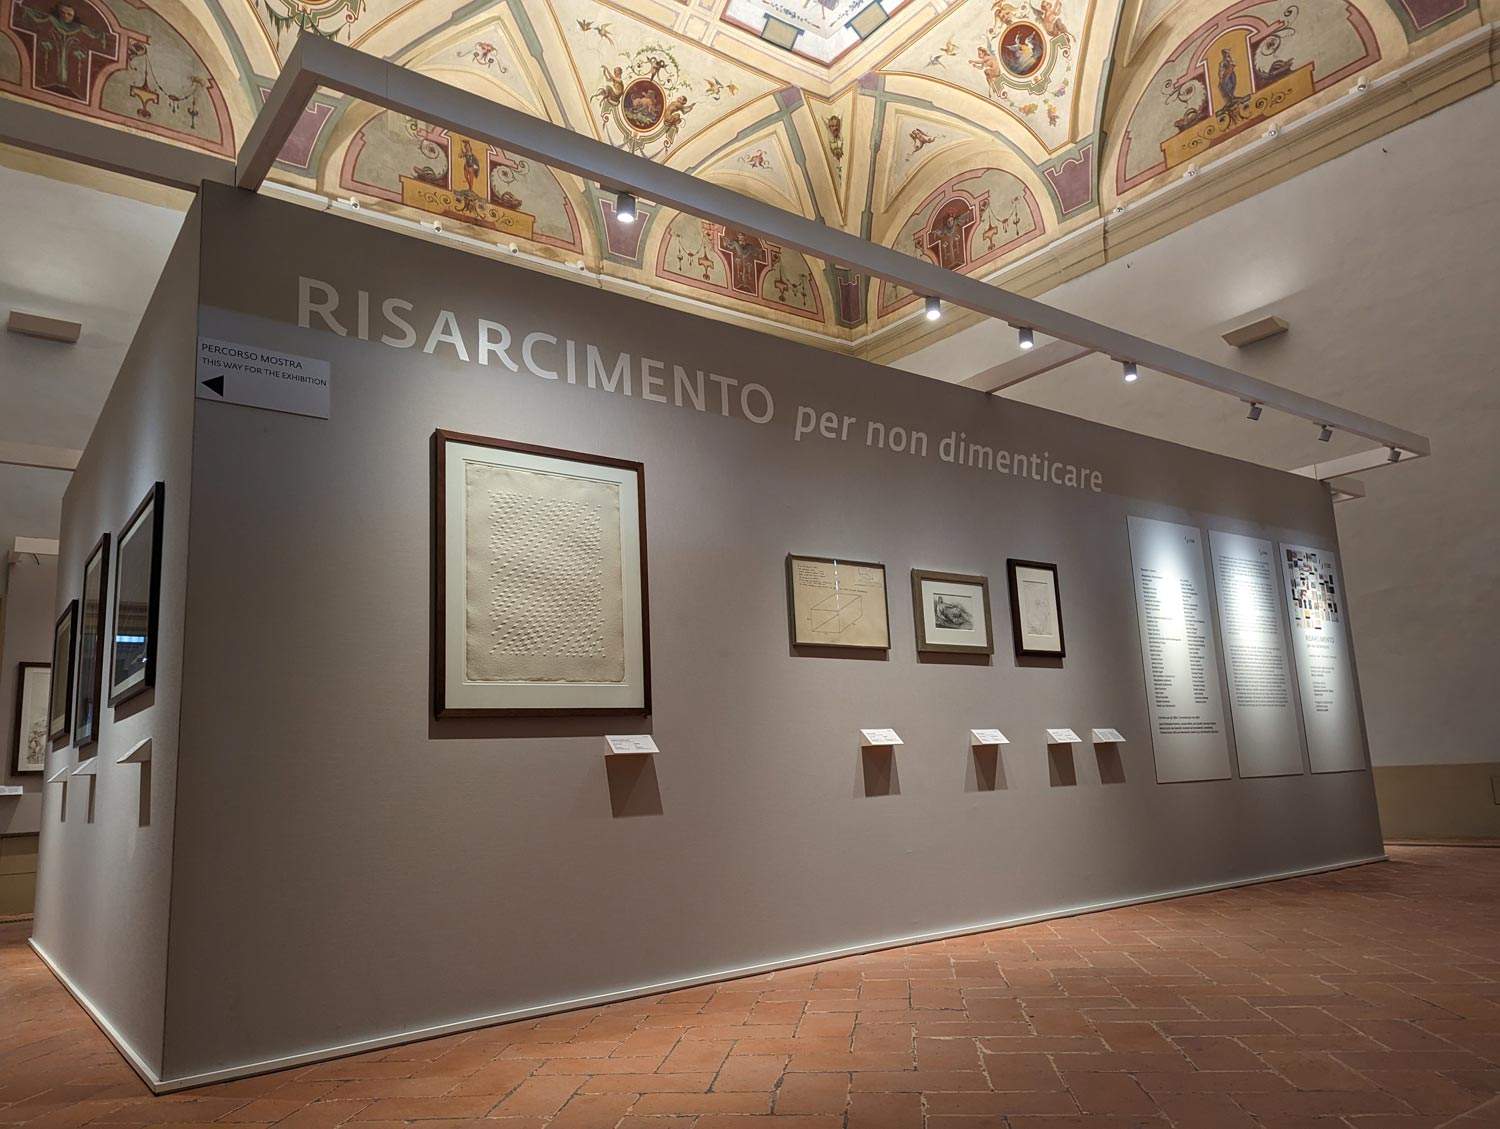 For the 30th anniversary of the Georgofili Massacre, the Uffizi revives a major exhibition